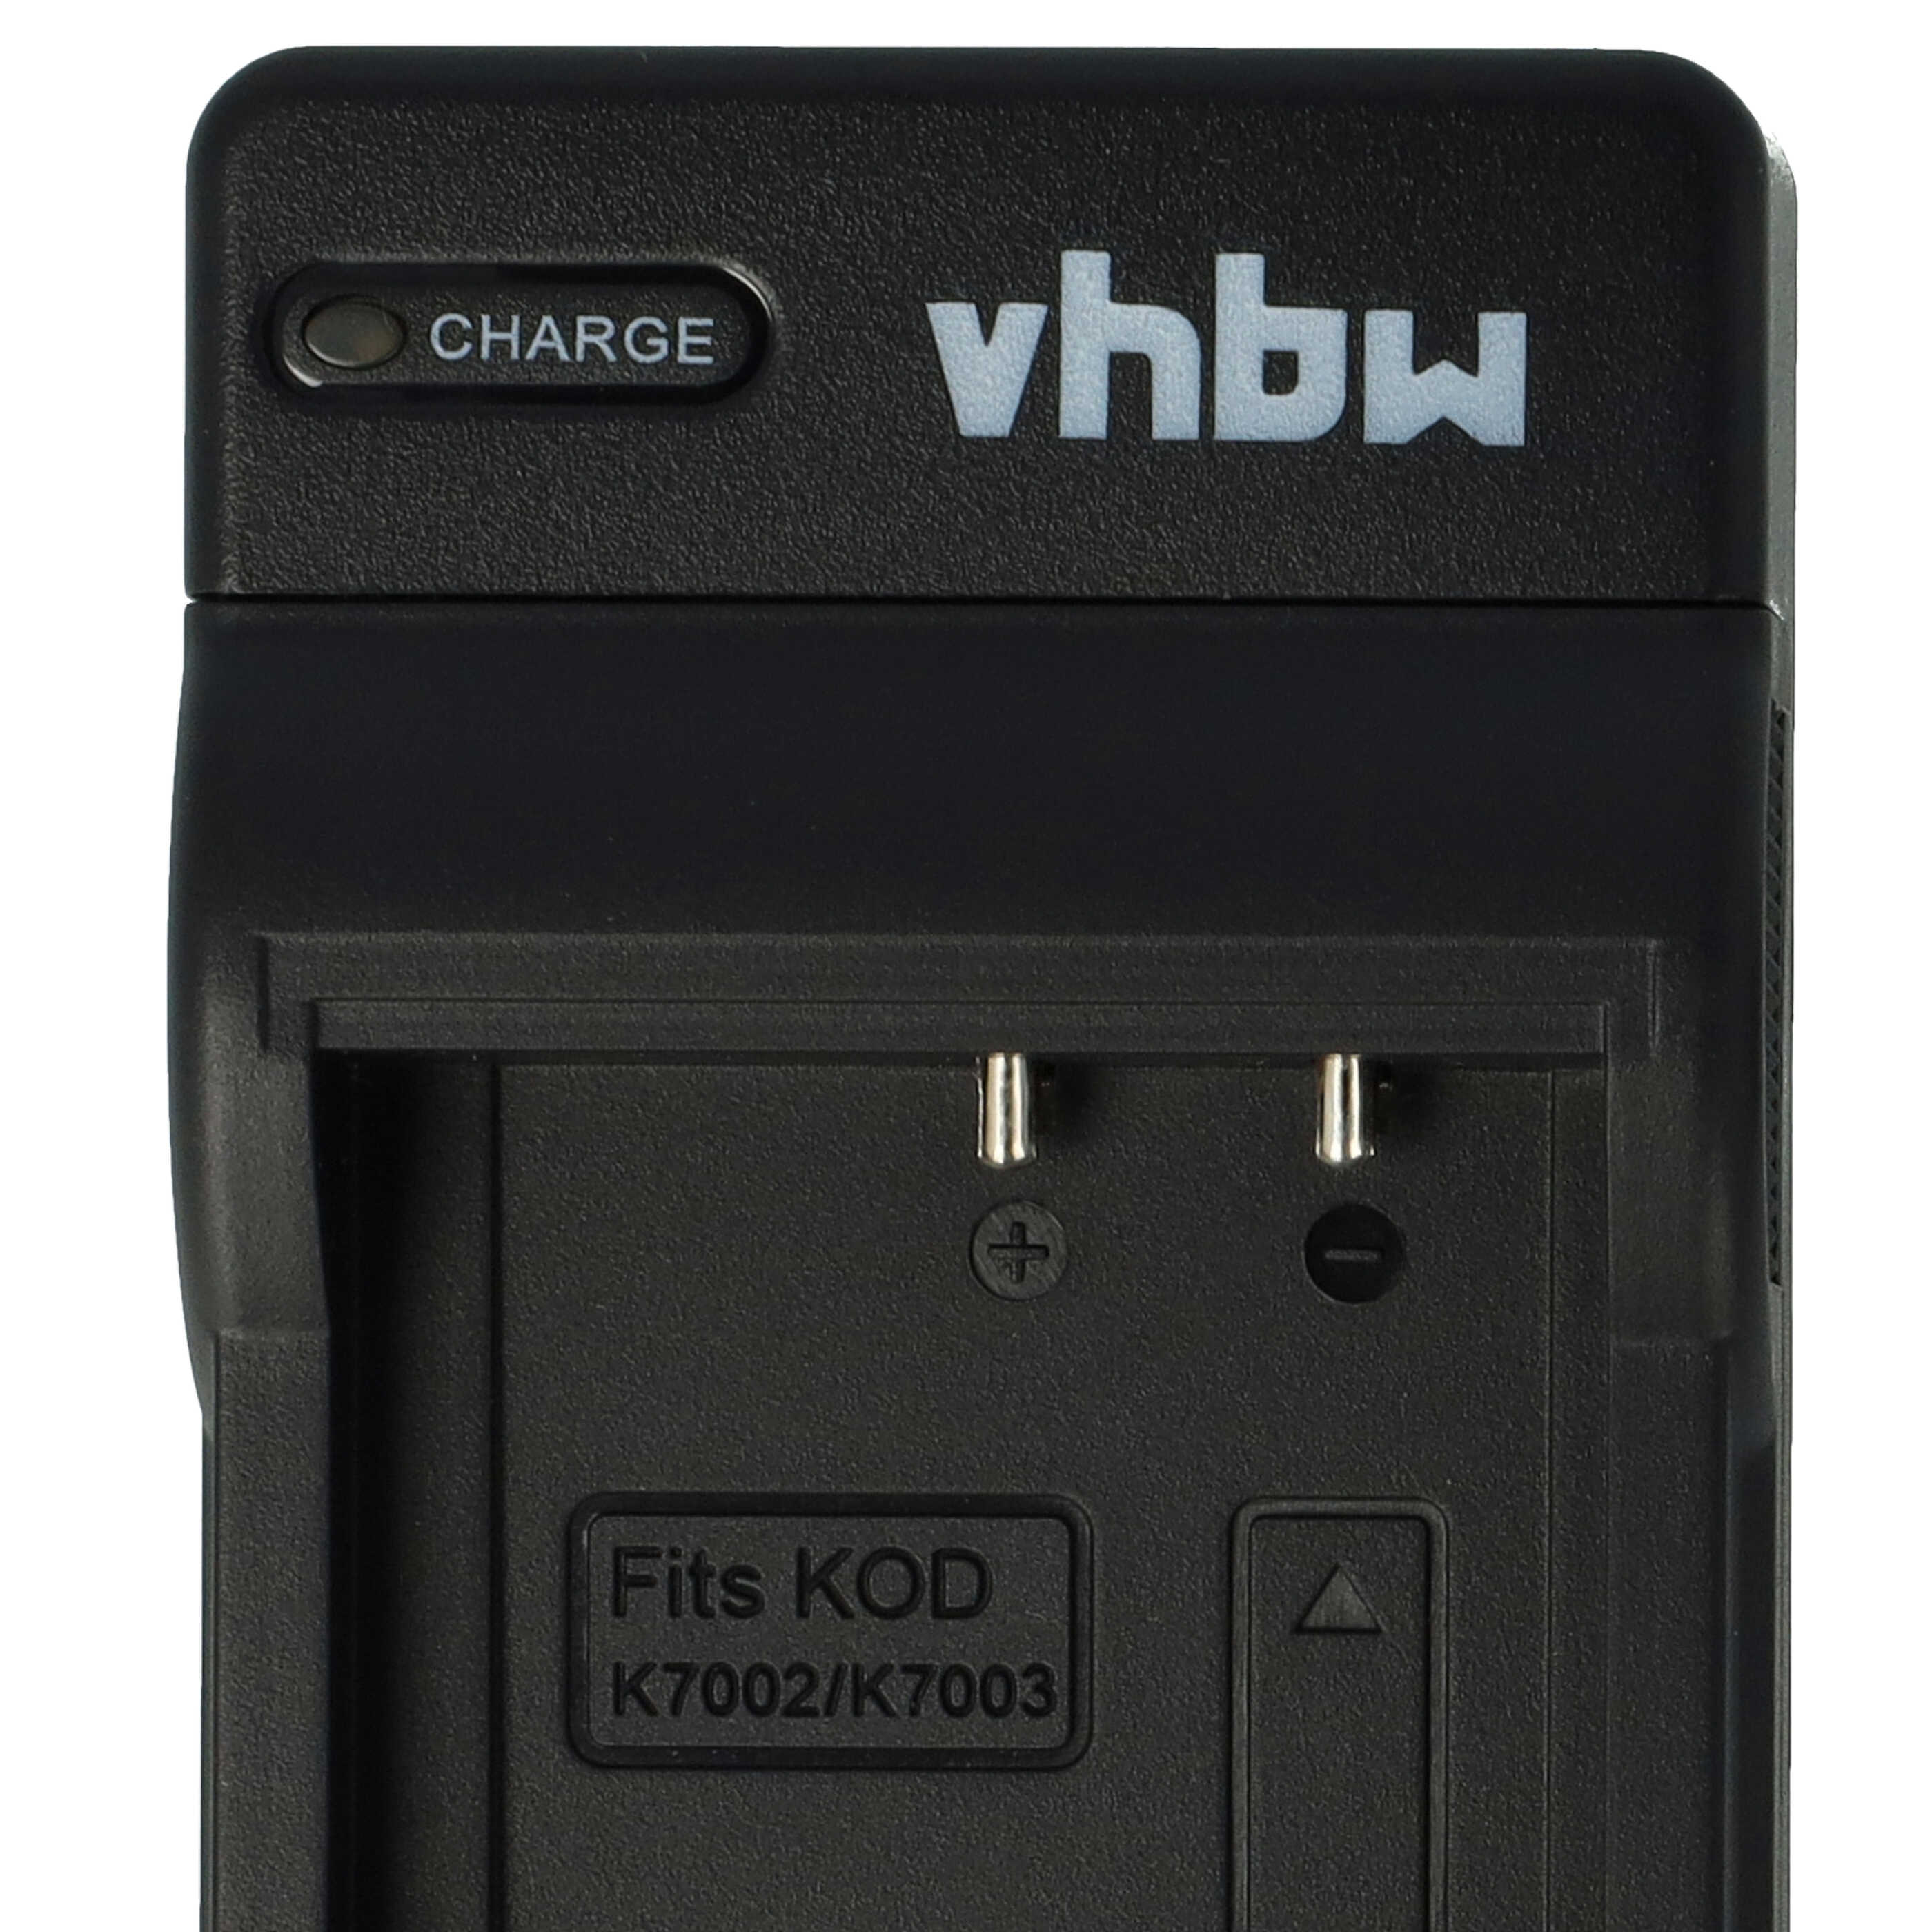 Battery Charger suitable for EasyShare V803 Camera etc. - 0.5 A, 4.2 V